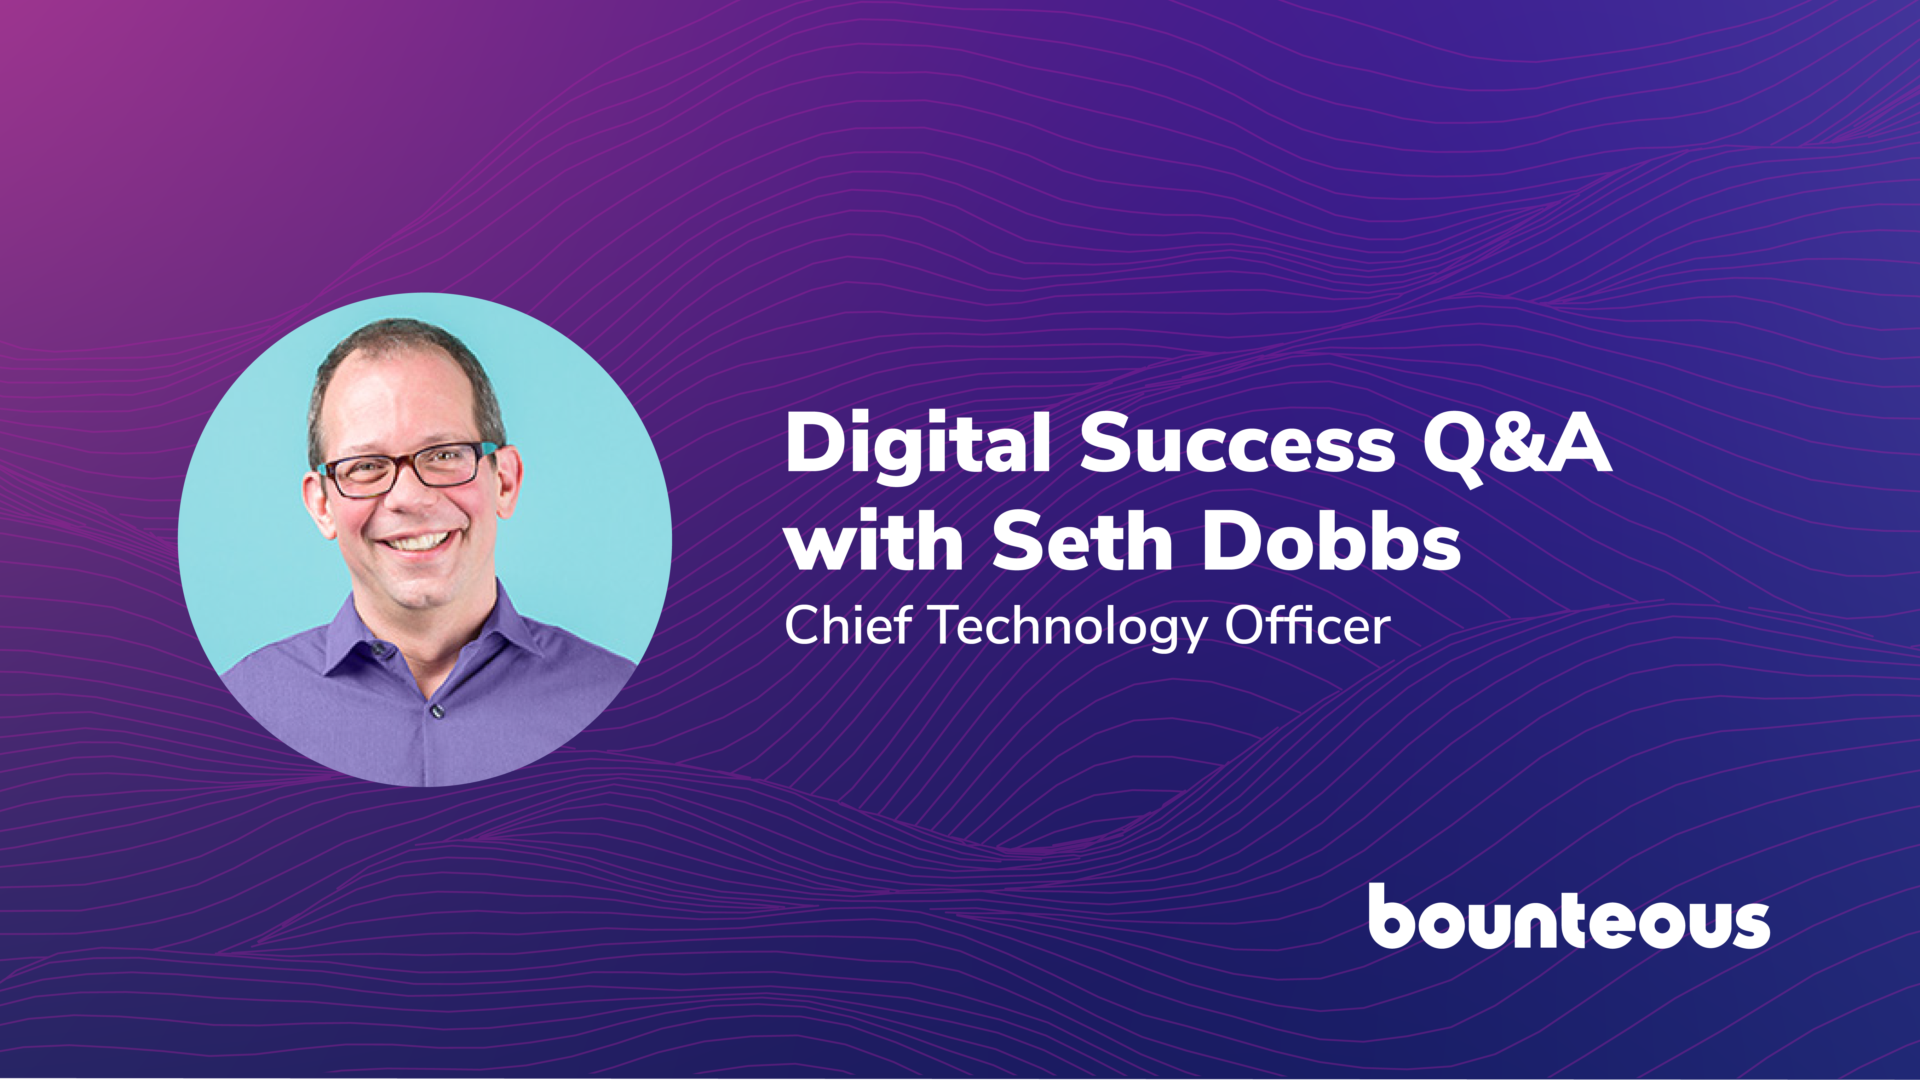 Digital success with Seth Dobbs